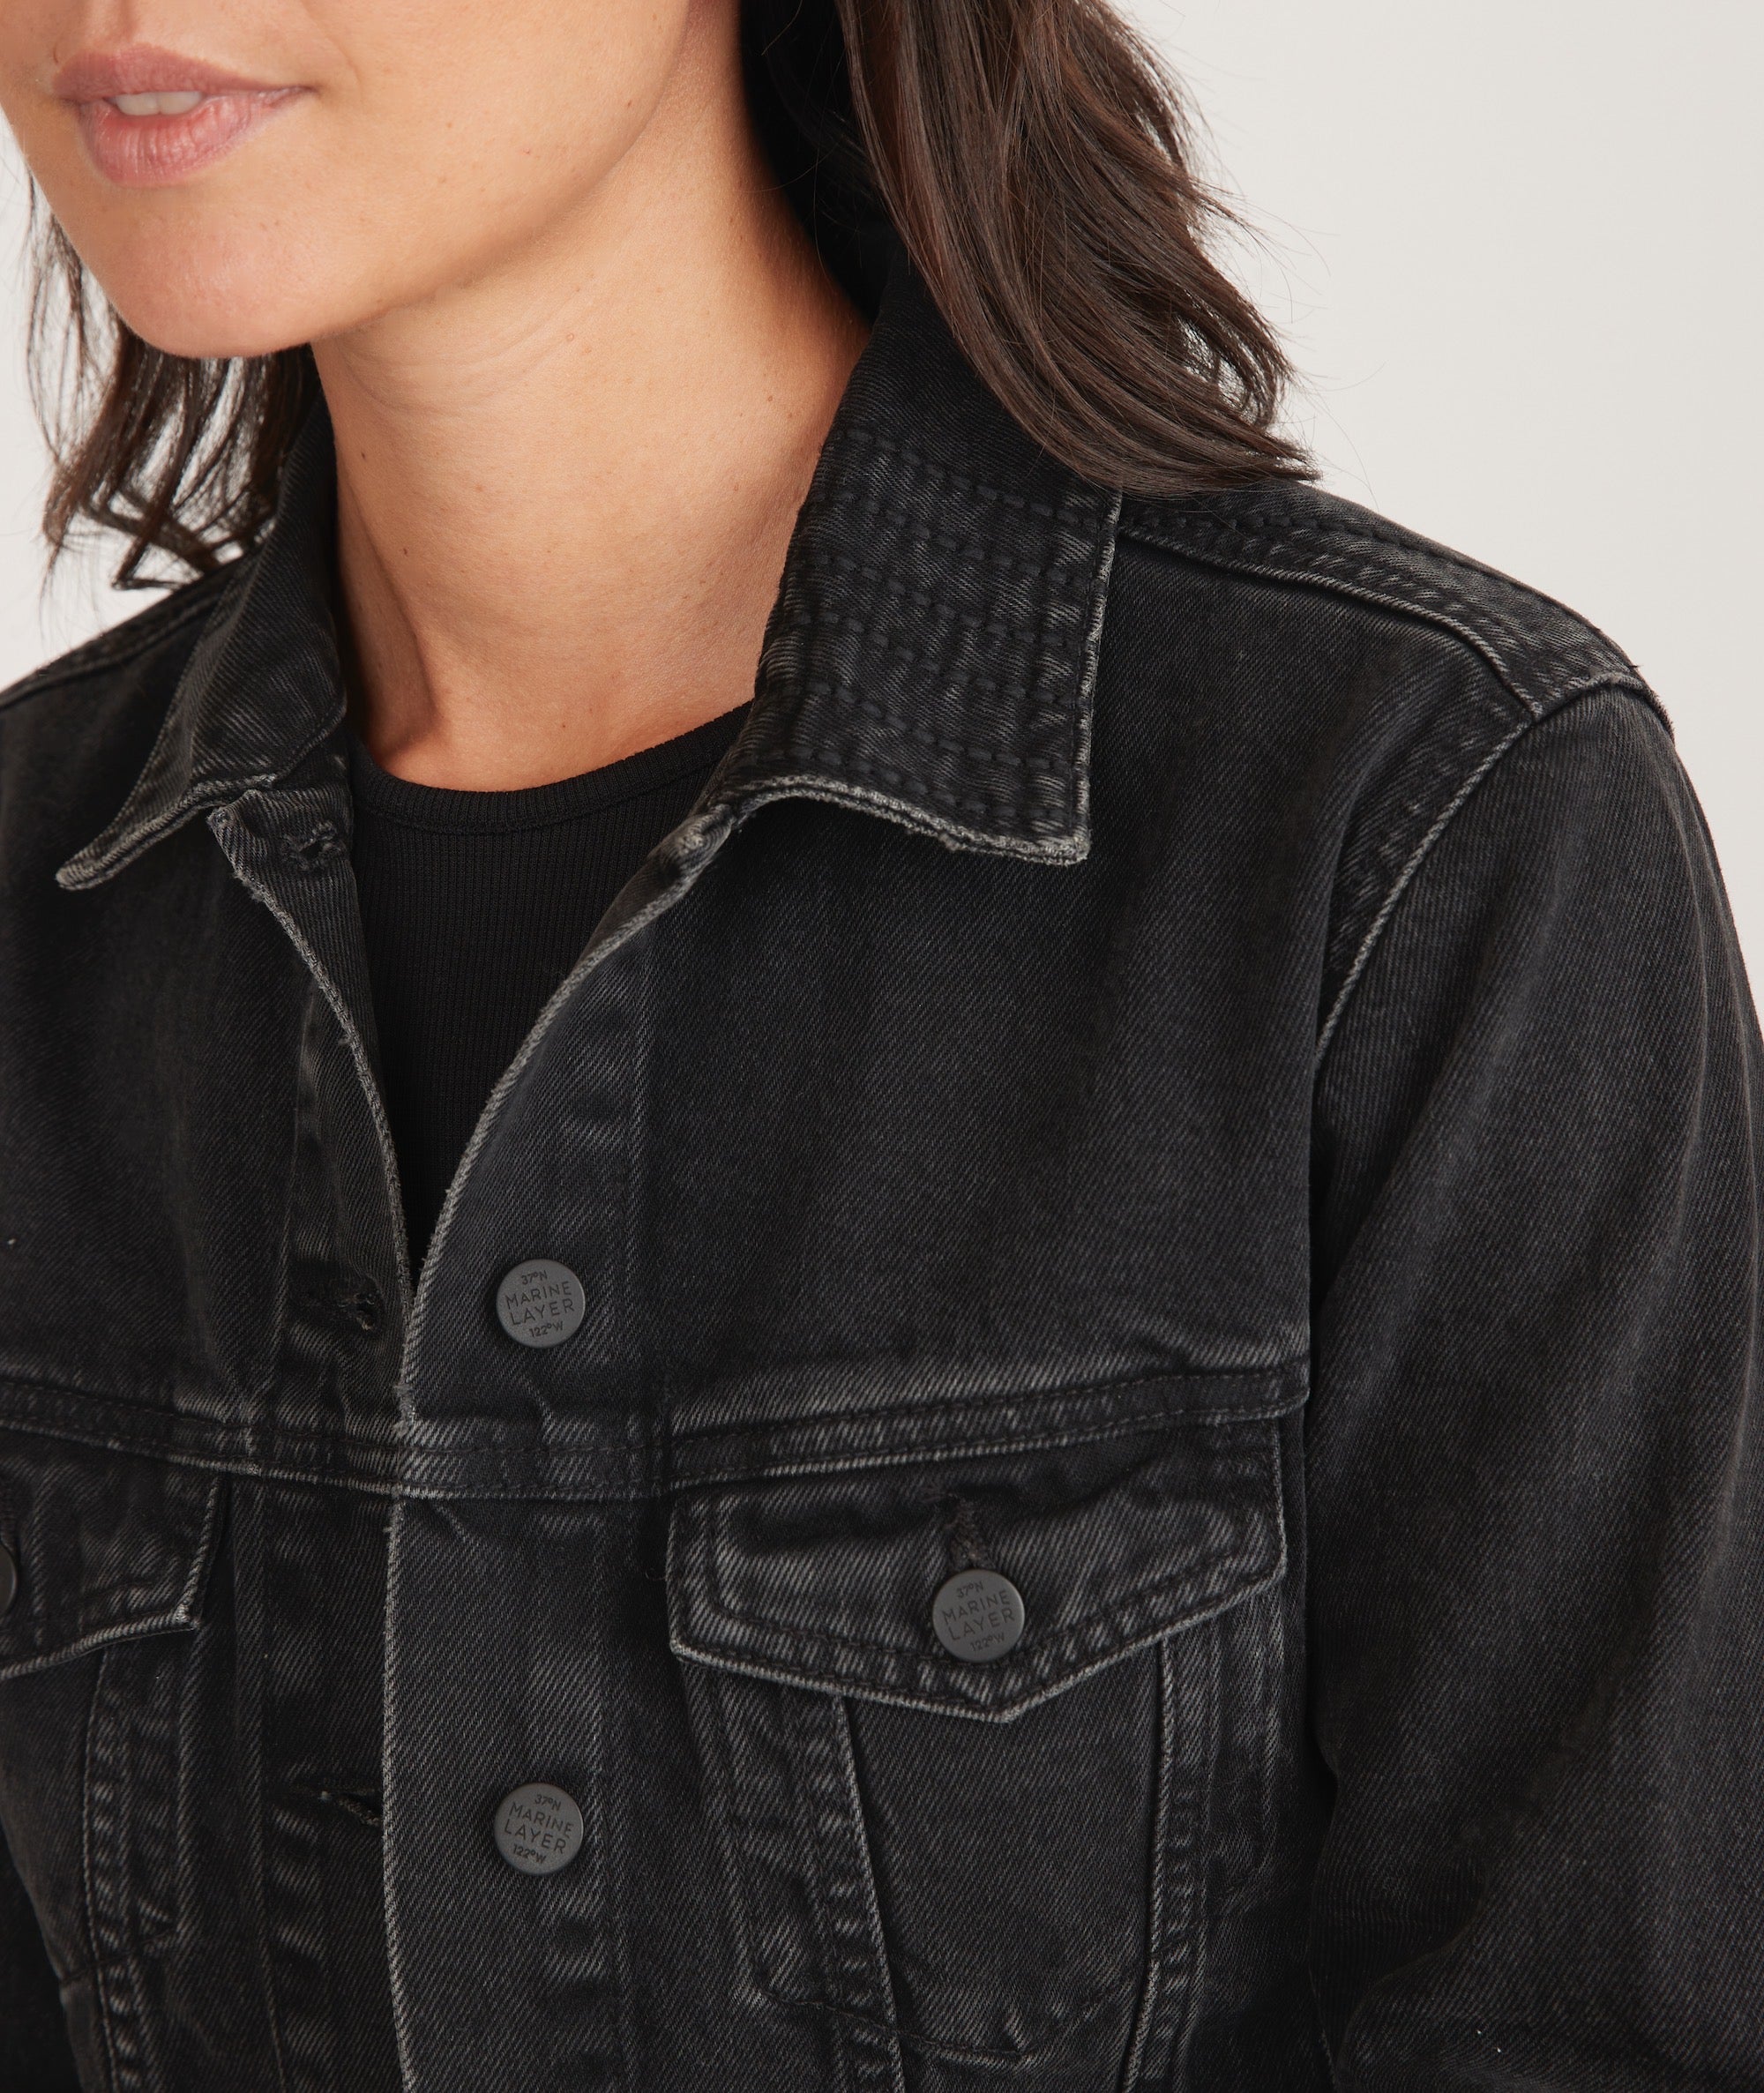 Buy FUNDAY FASHION Full Sleeve Blue Solid Women's Denim Jacket (Medium, New  Light Blue) at Amazon.in